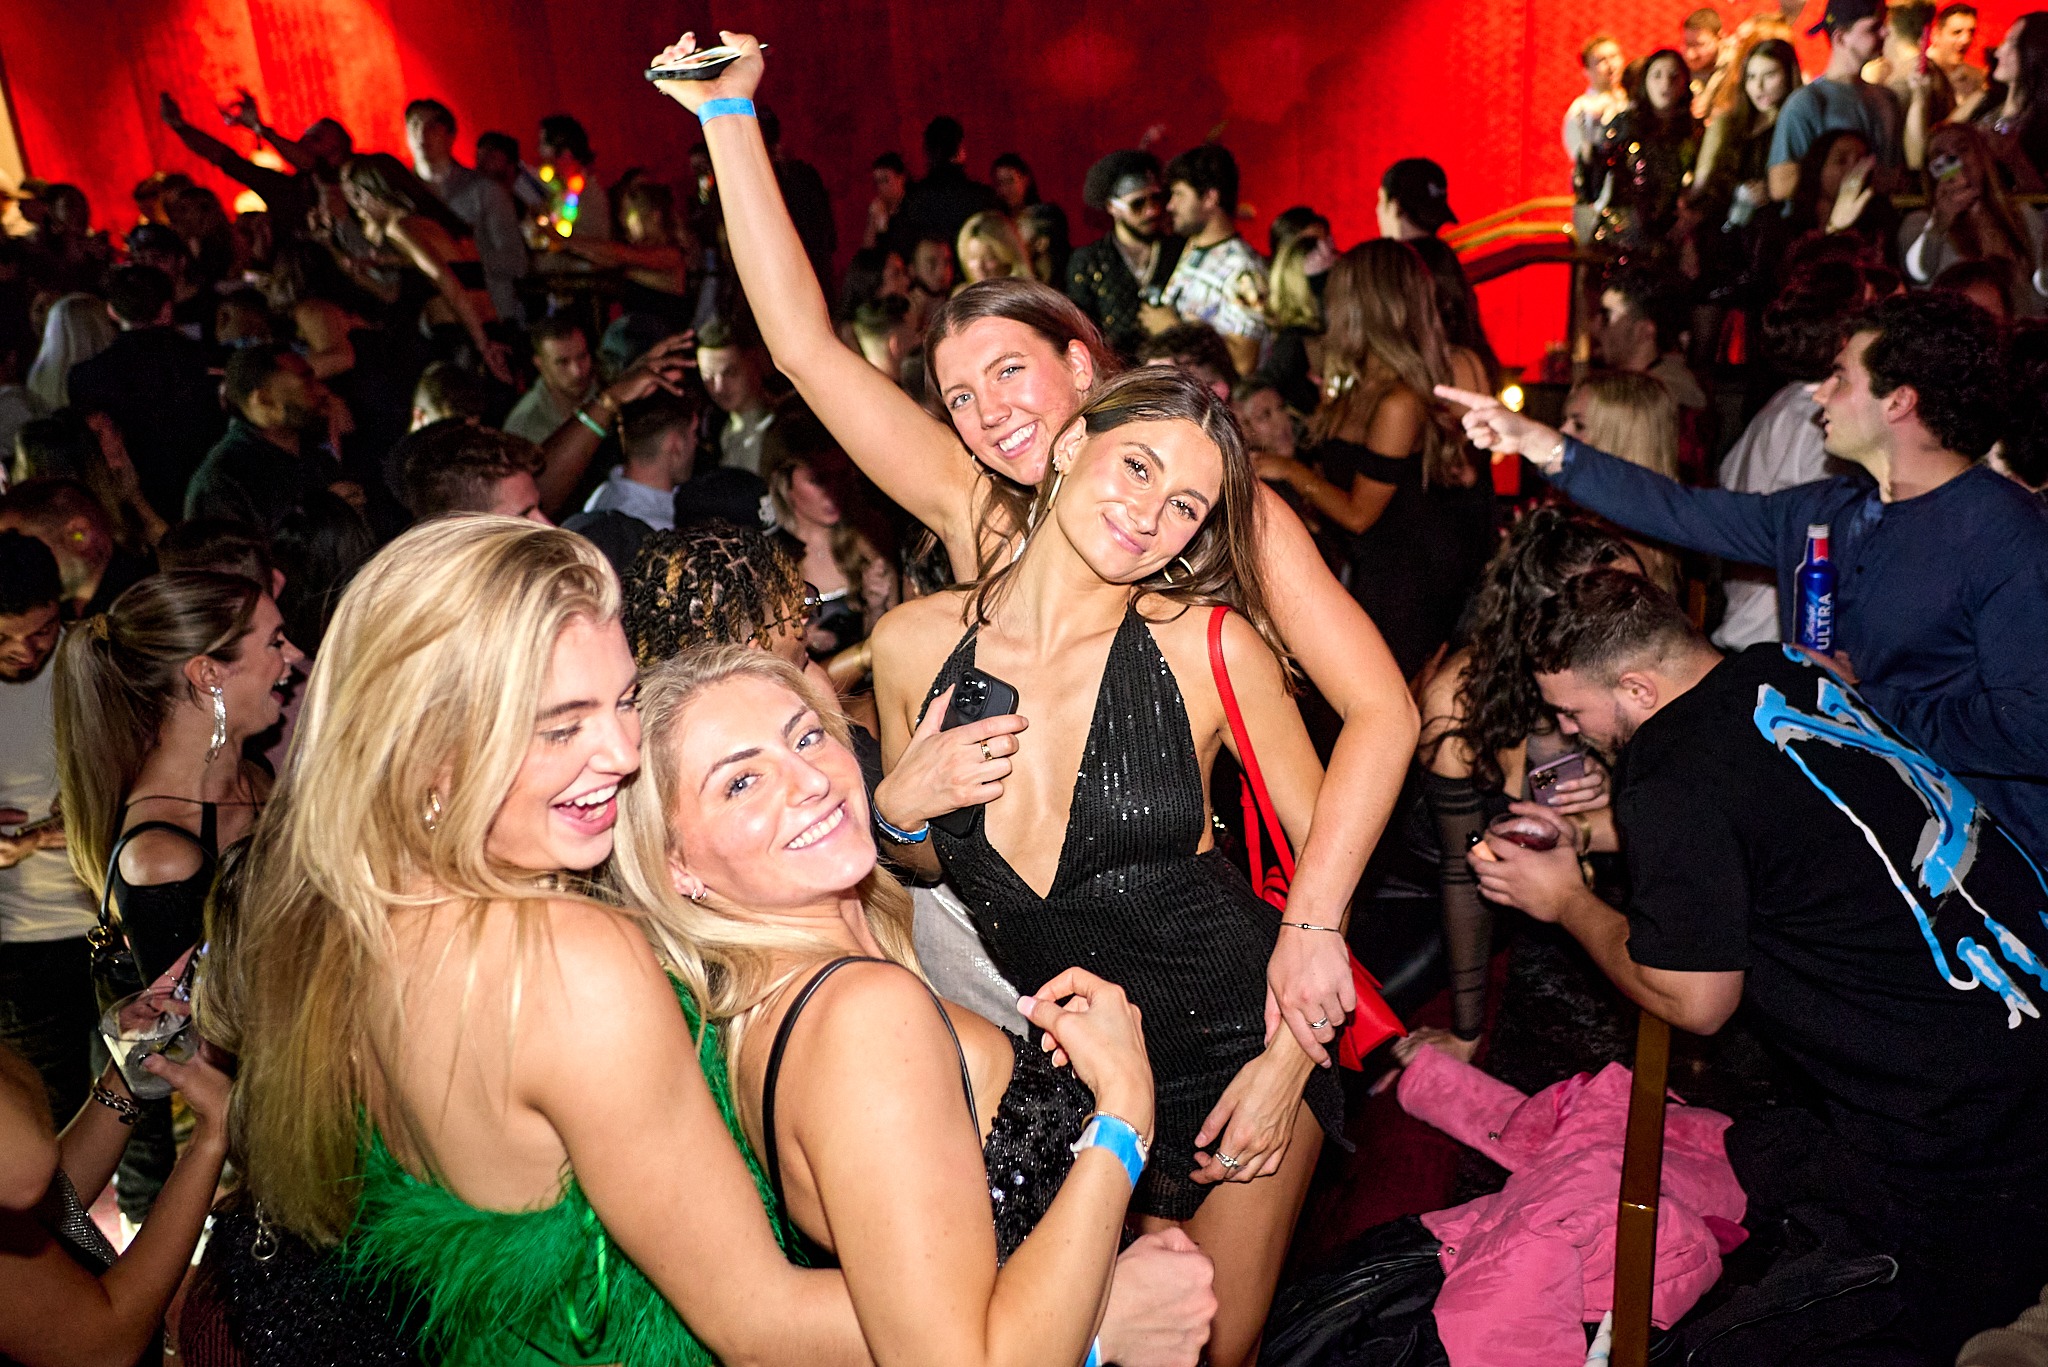 Bachelorette Parties, Clubs in Boston, Boston Nightlife